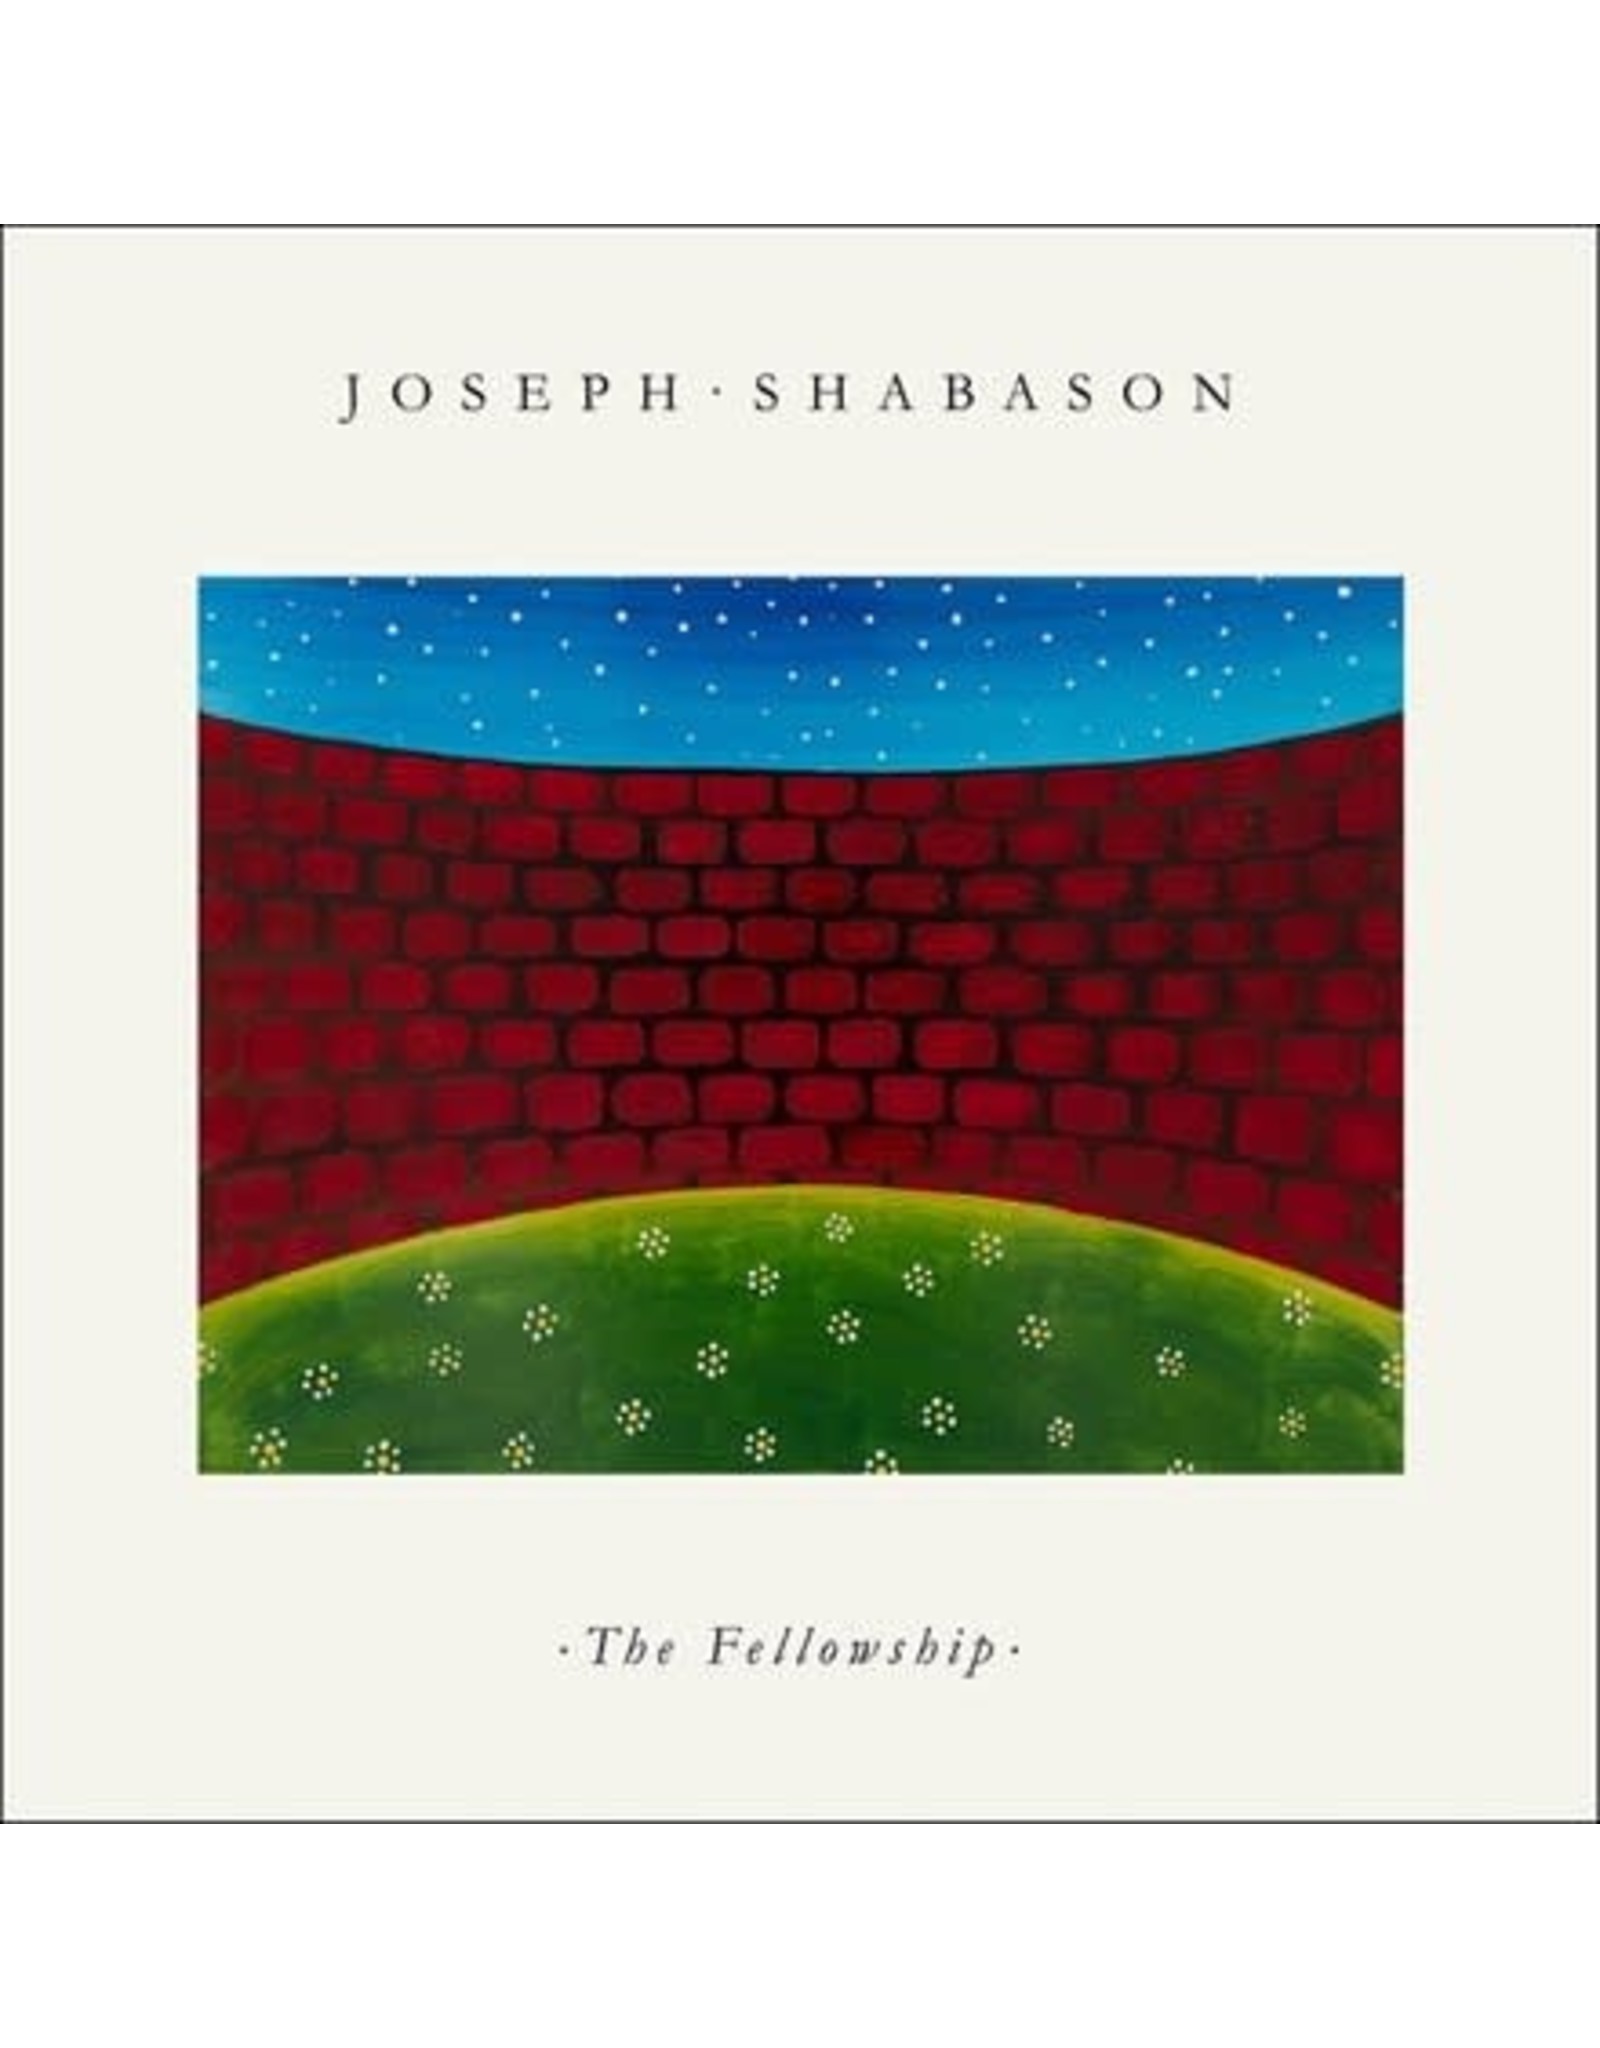 Western Vinyl Shabason, Joseph: The Fellowship (sky blue) LP